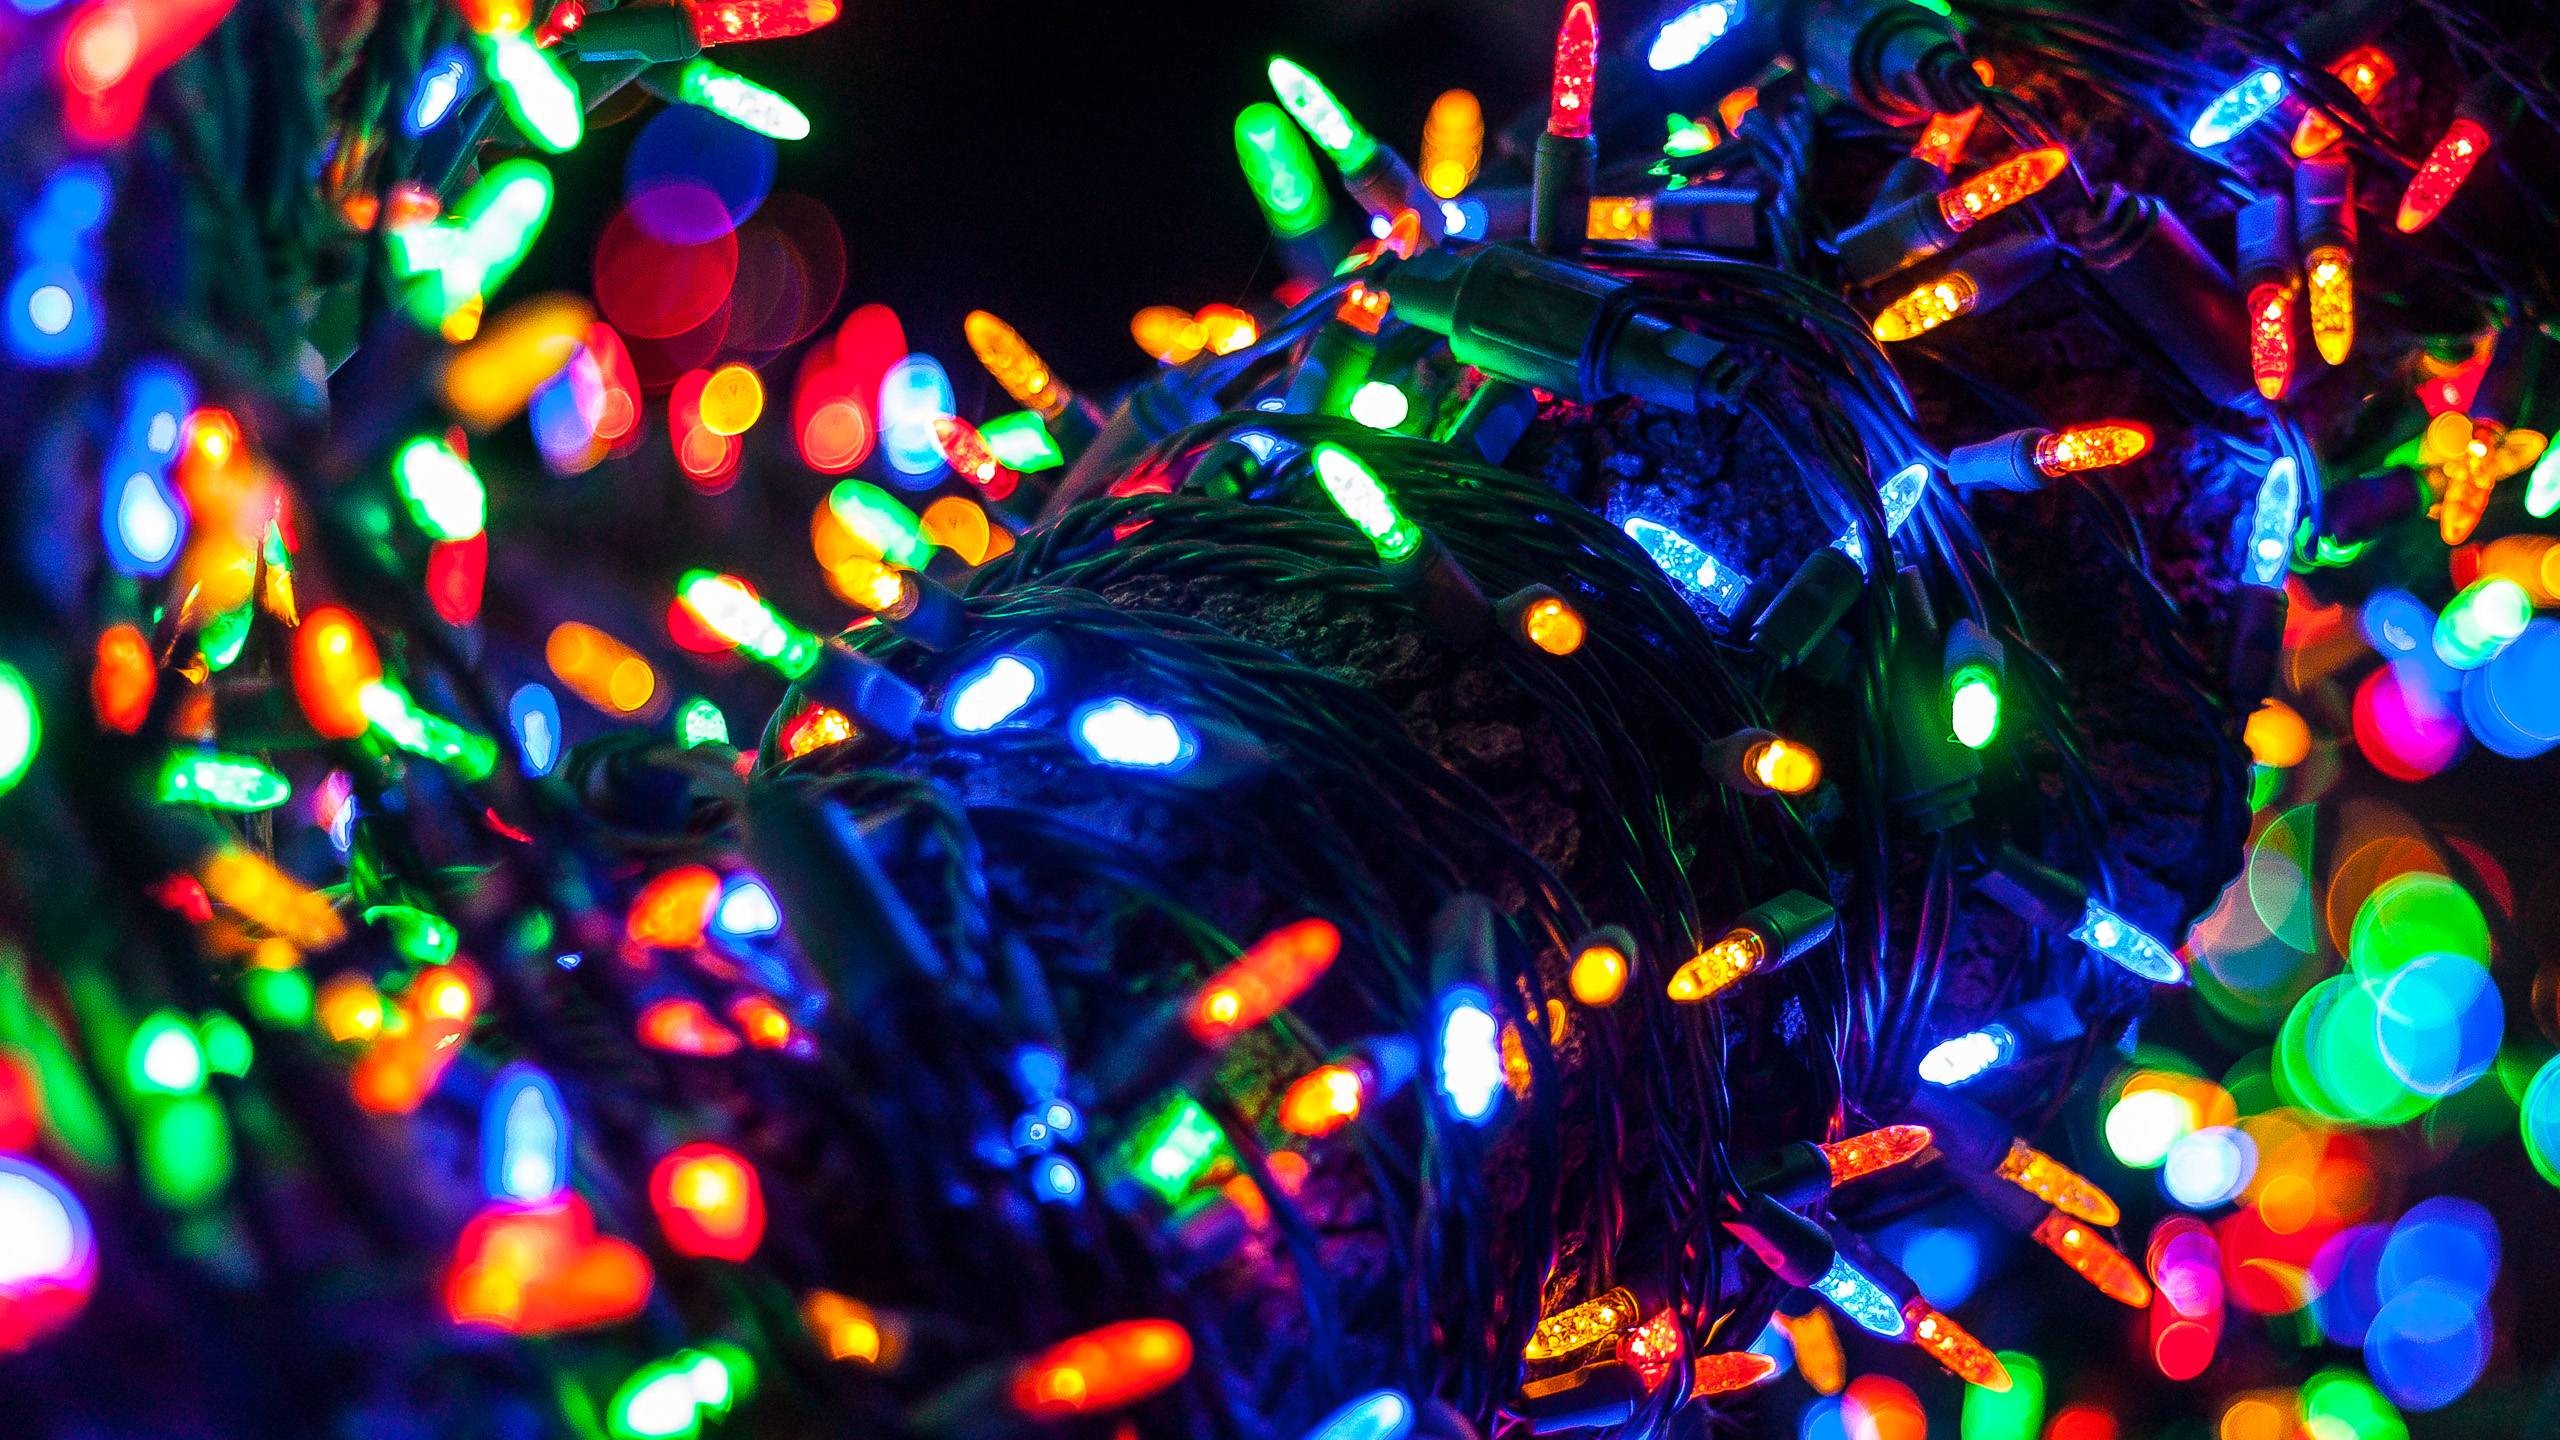 General 2560x1440 lights LEDs Christmas lights colorful